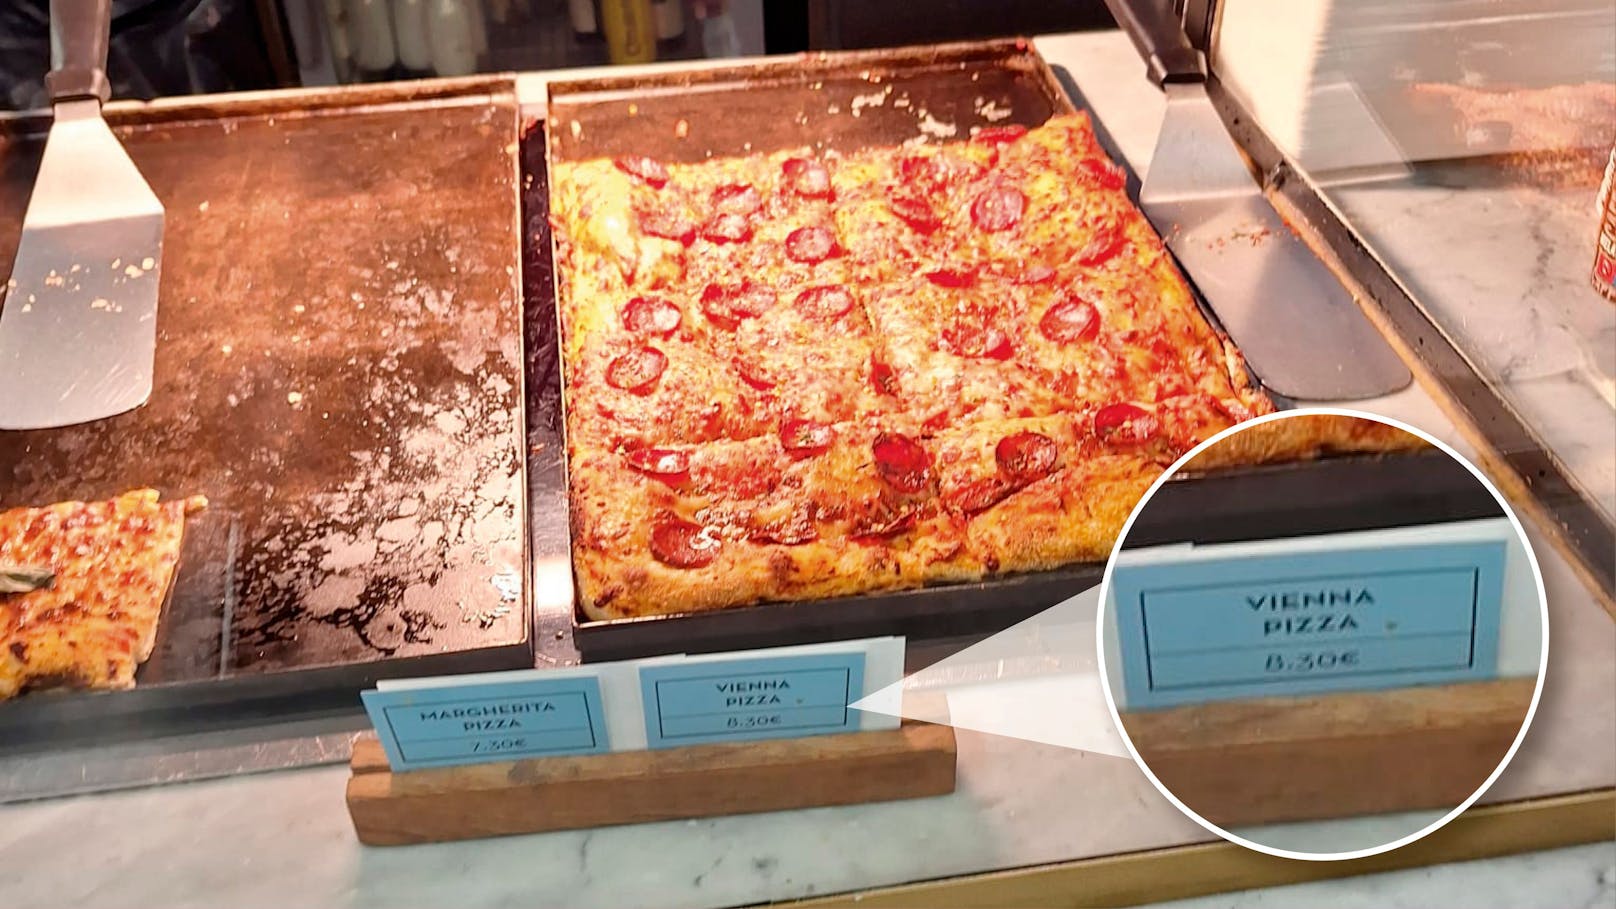 Preise heben ab! Pizzastück am Airport kostet 8,30 Euro